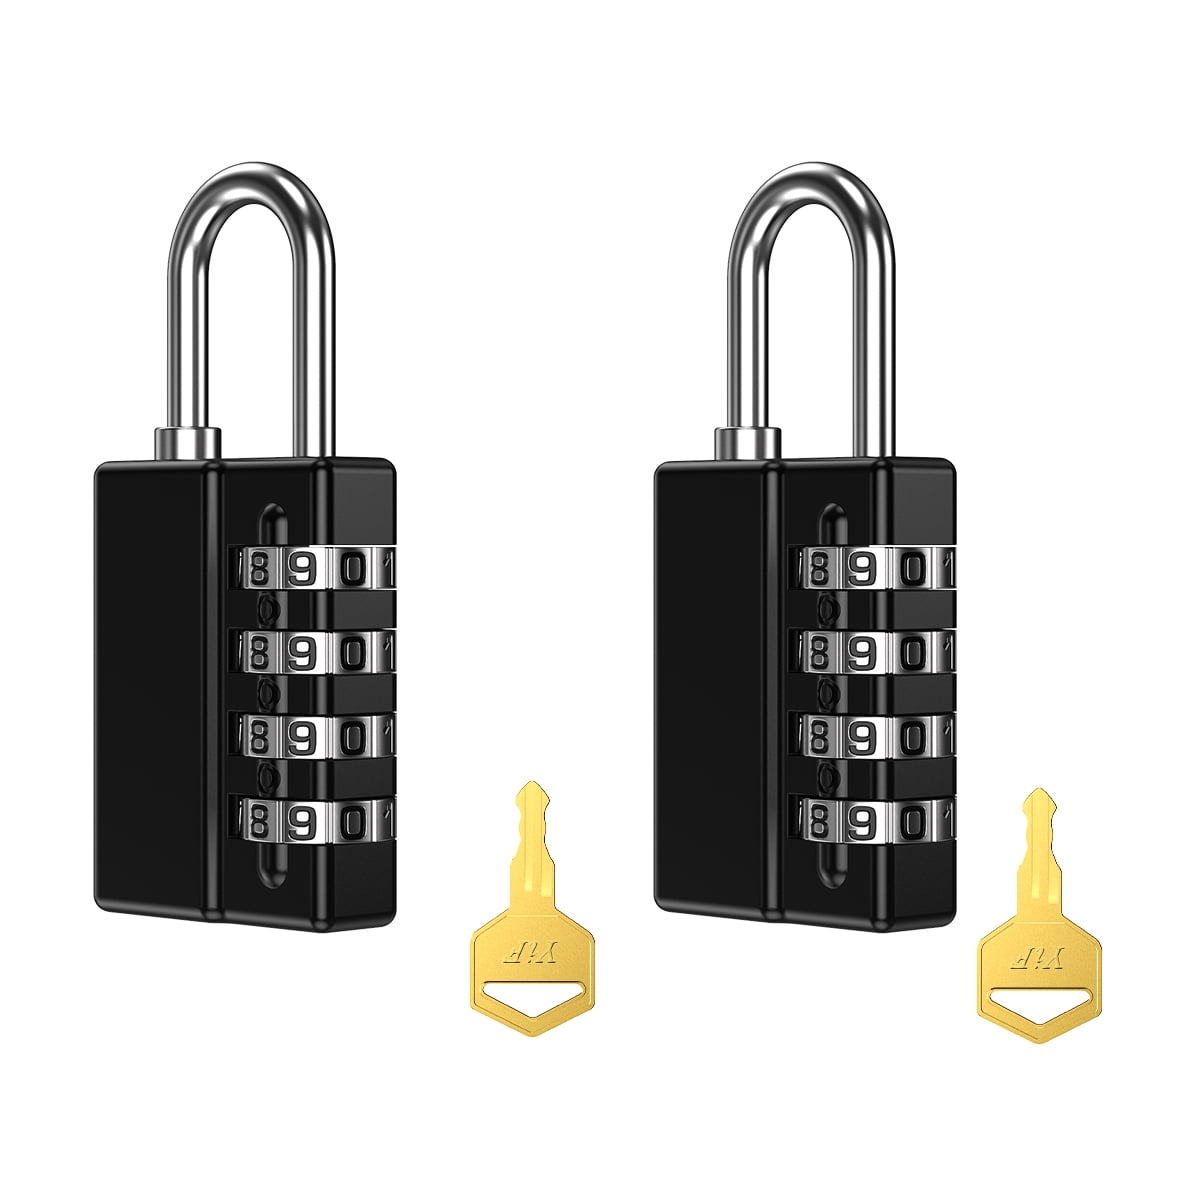 Security Padlock 4 Digit Lock Set Mental and ORIA 2 Pack Combination Padlock 